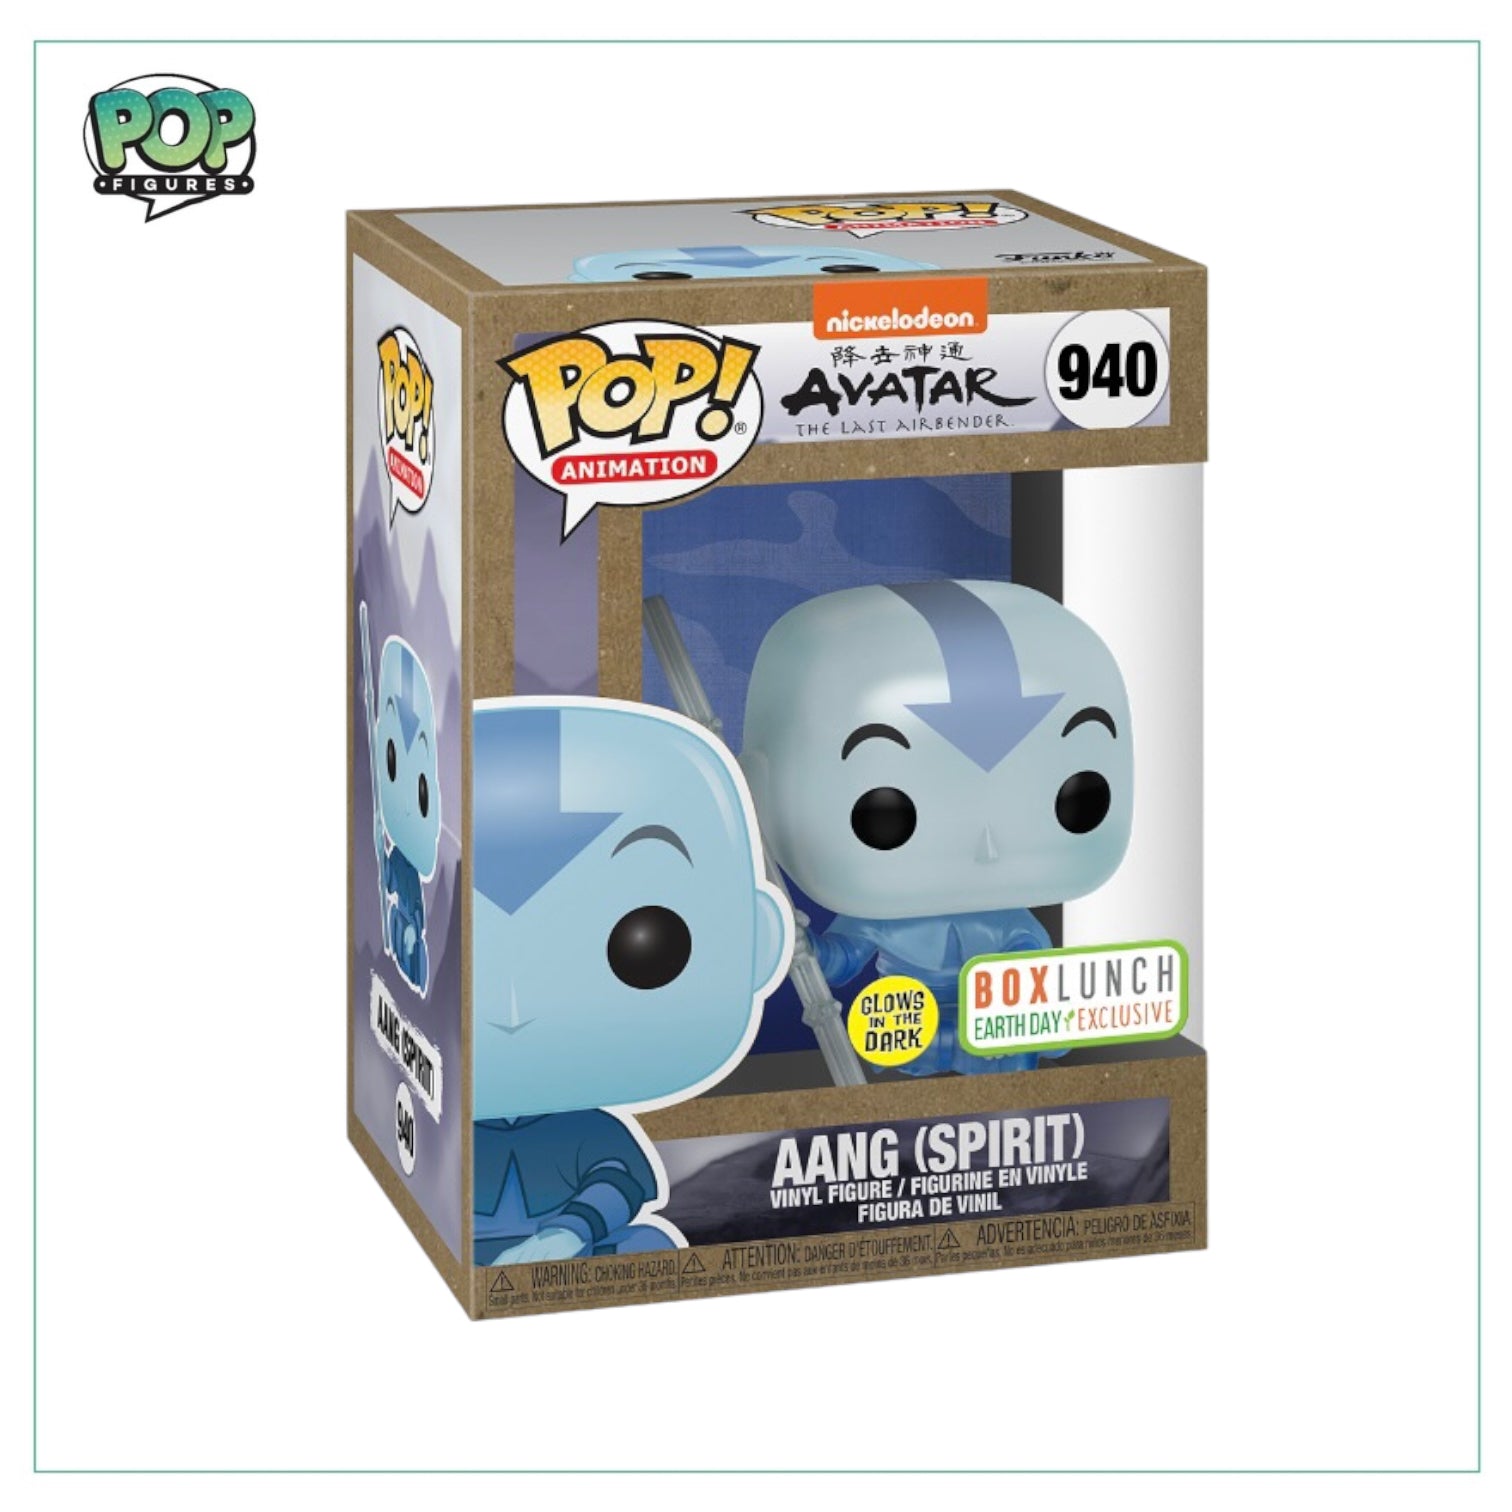 Aang (Spirit) Glow In The Dark #940 Funko Pop! Avatar: The Last Airbender - Box Lunch Exclusive